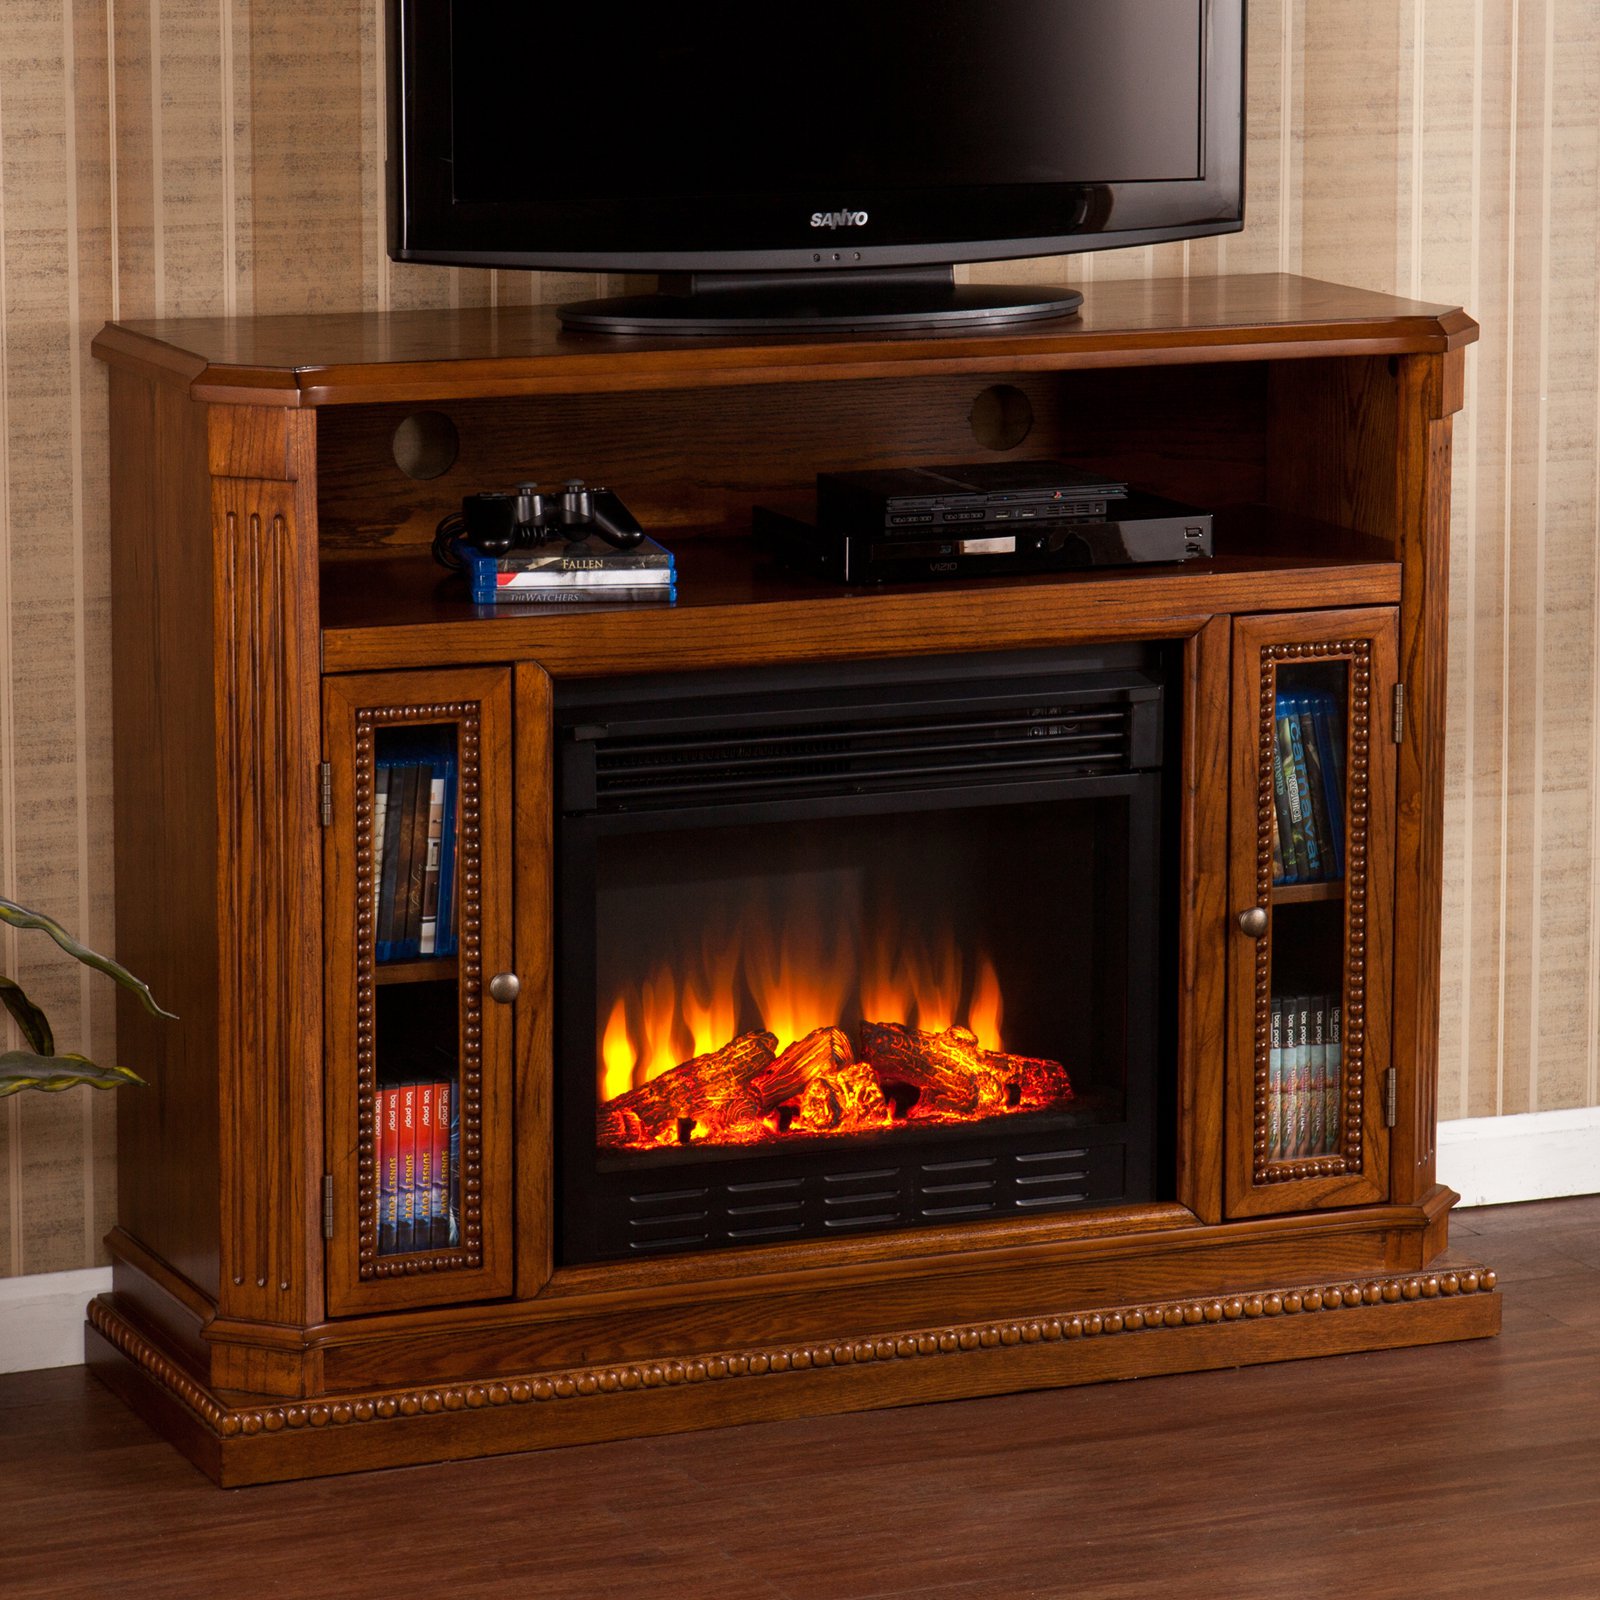 Infrared Fireplace Insert Luxury southern Enterprises atkinson Rich Brown Oak Electric